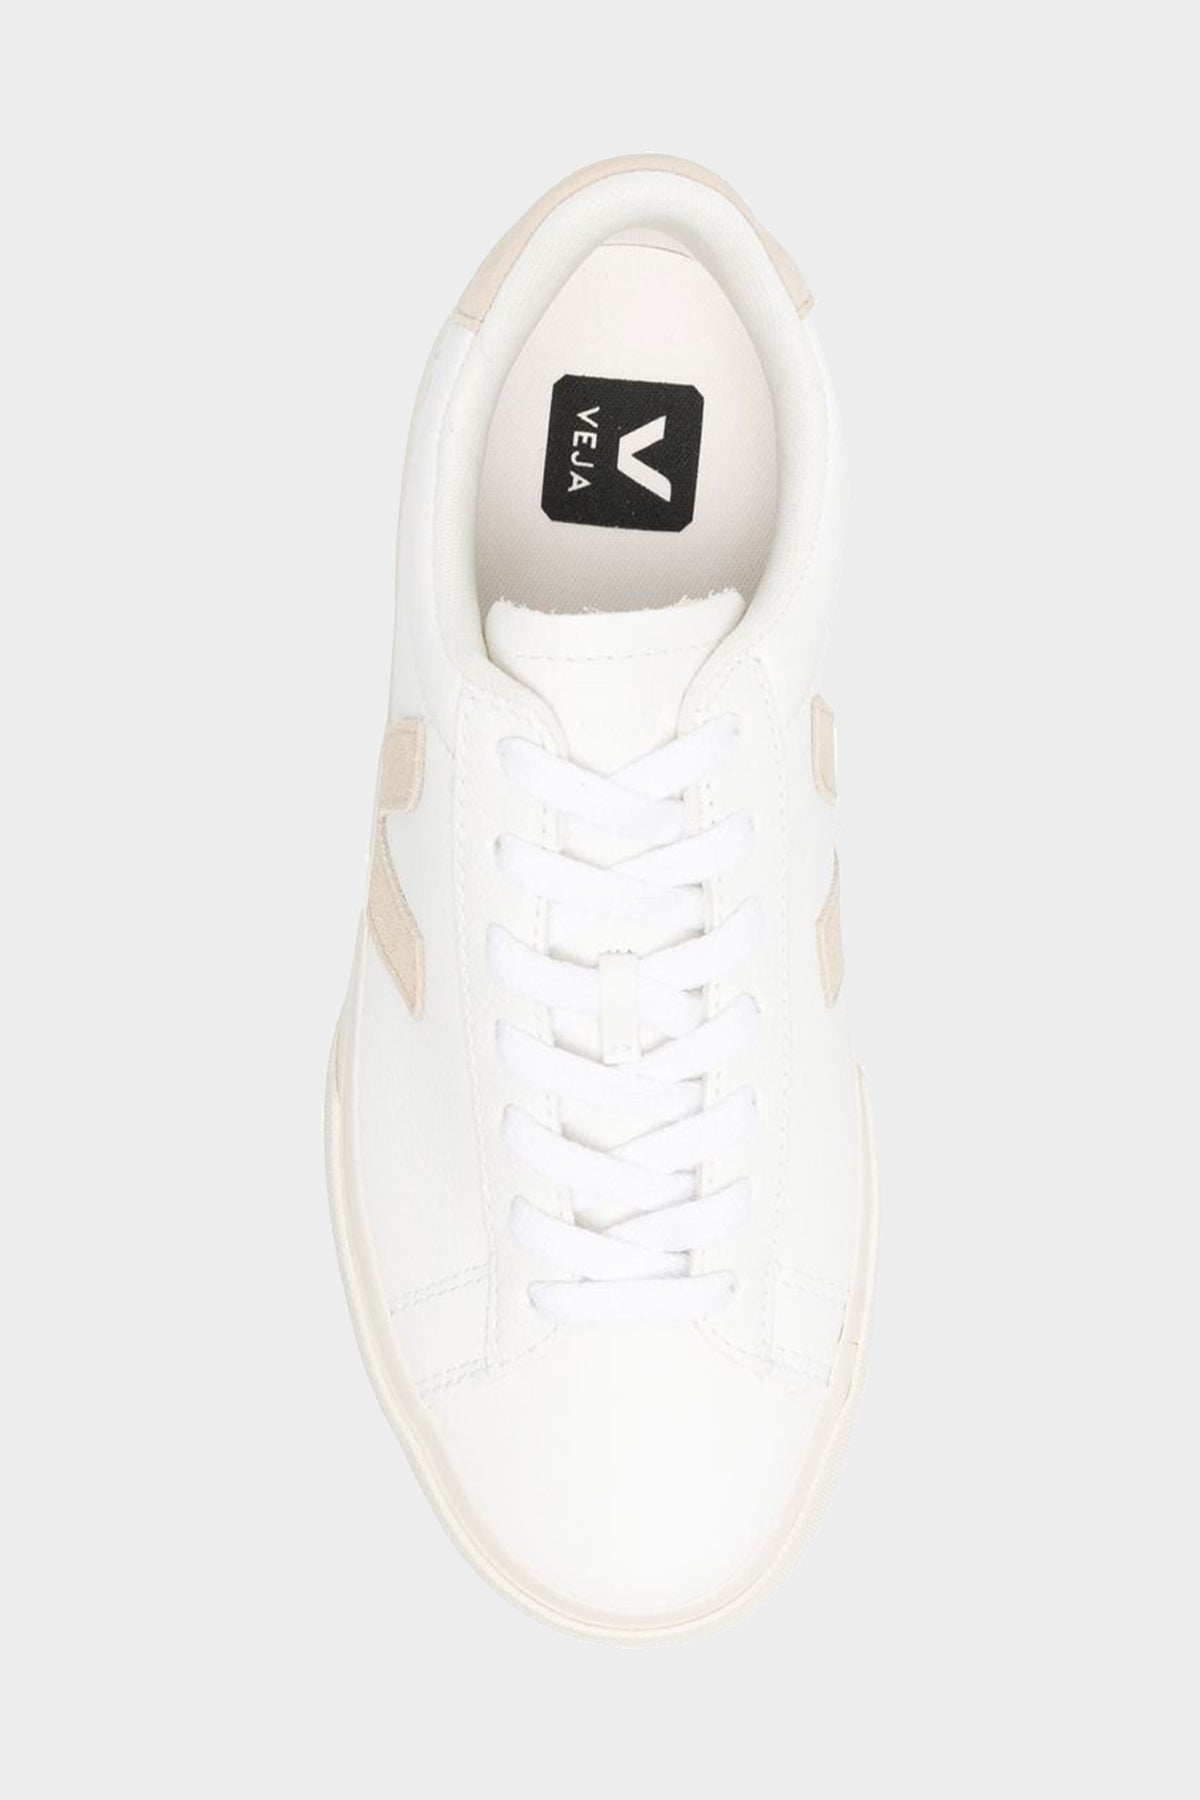 Campo Chromefree Leather Sneaker in White Almond - shop-olivia.com